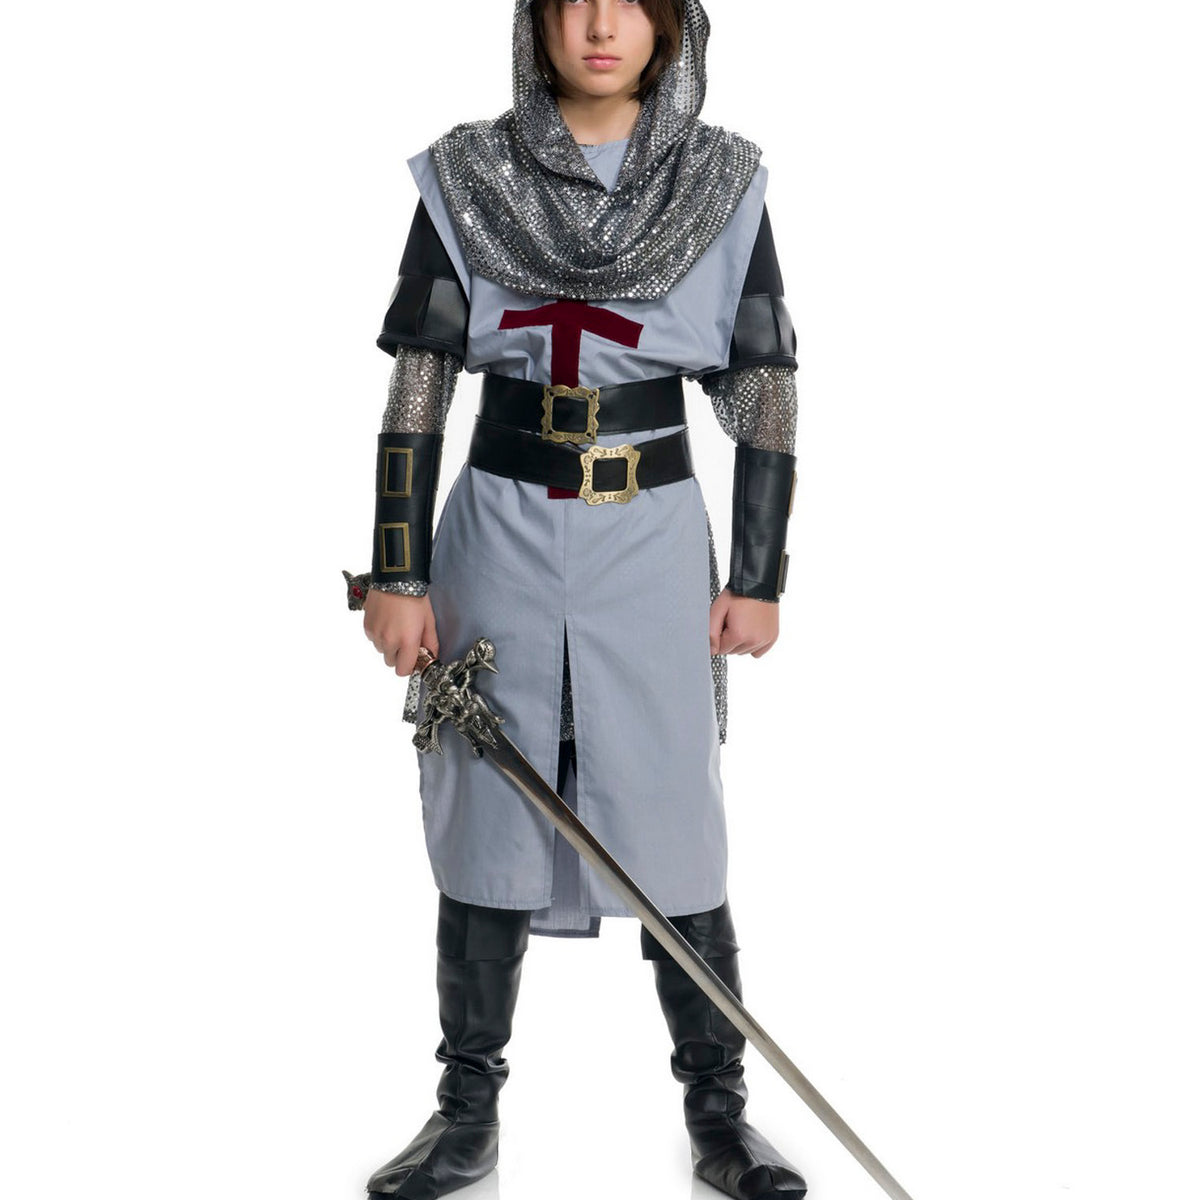 Chivalrous Knight Costume for Kids — Costume Super Center